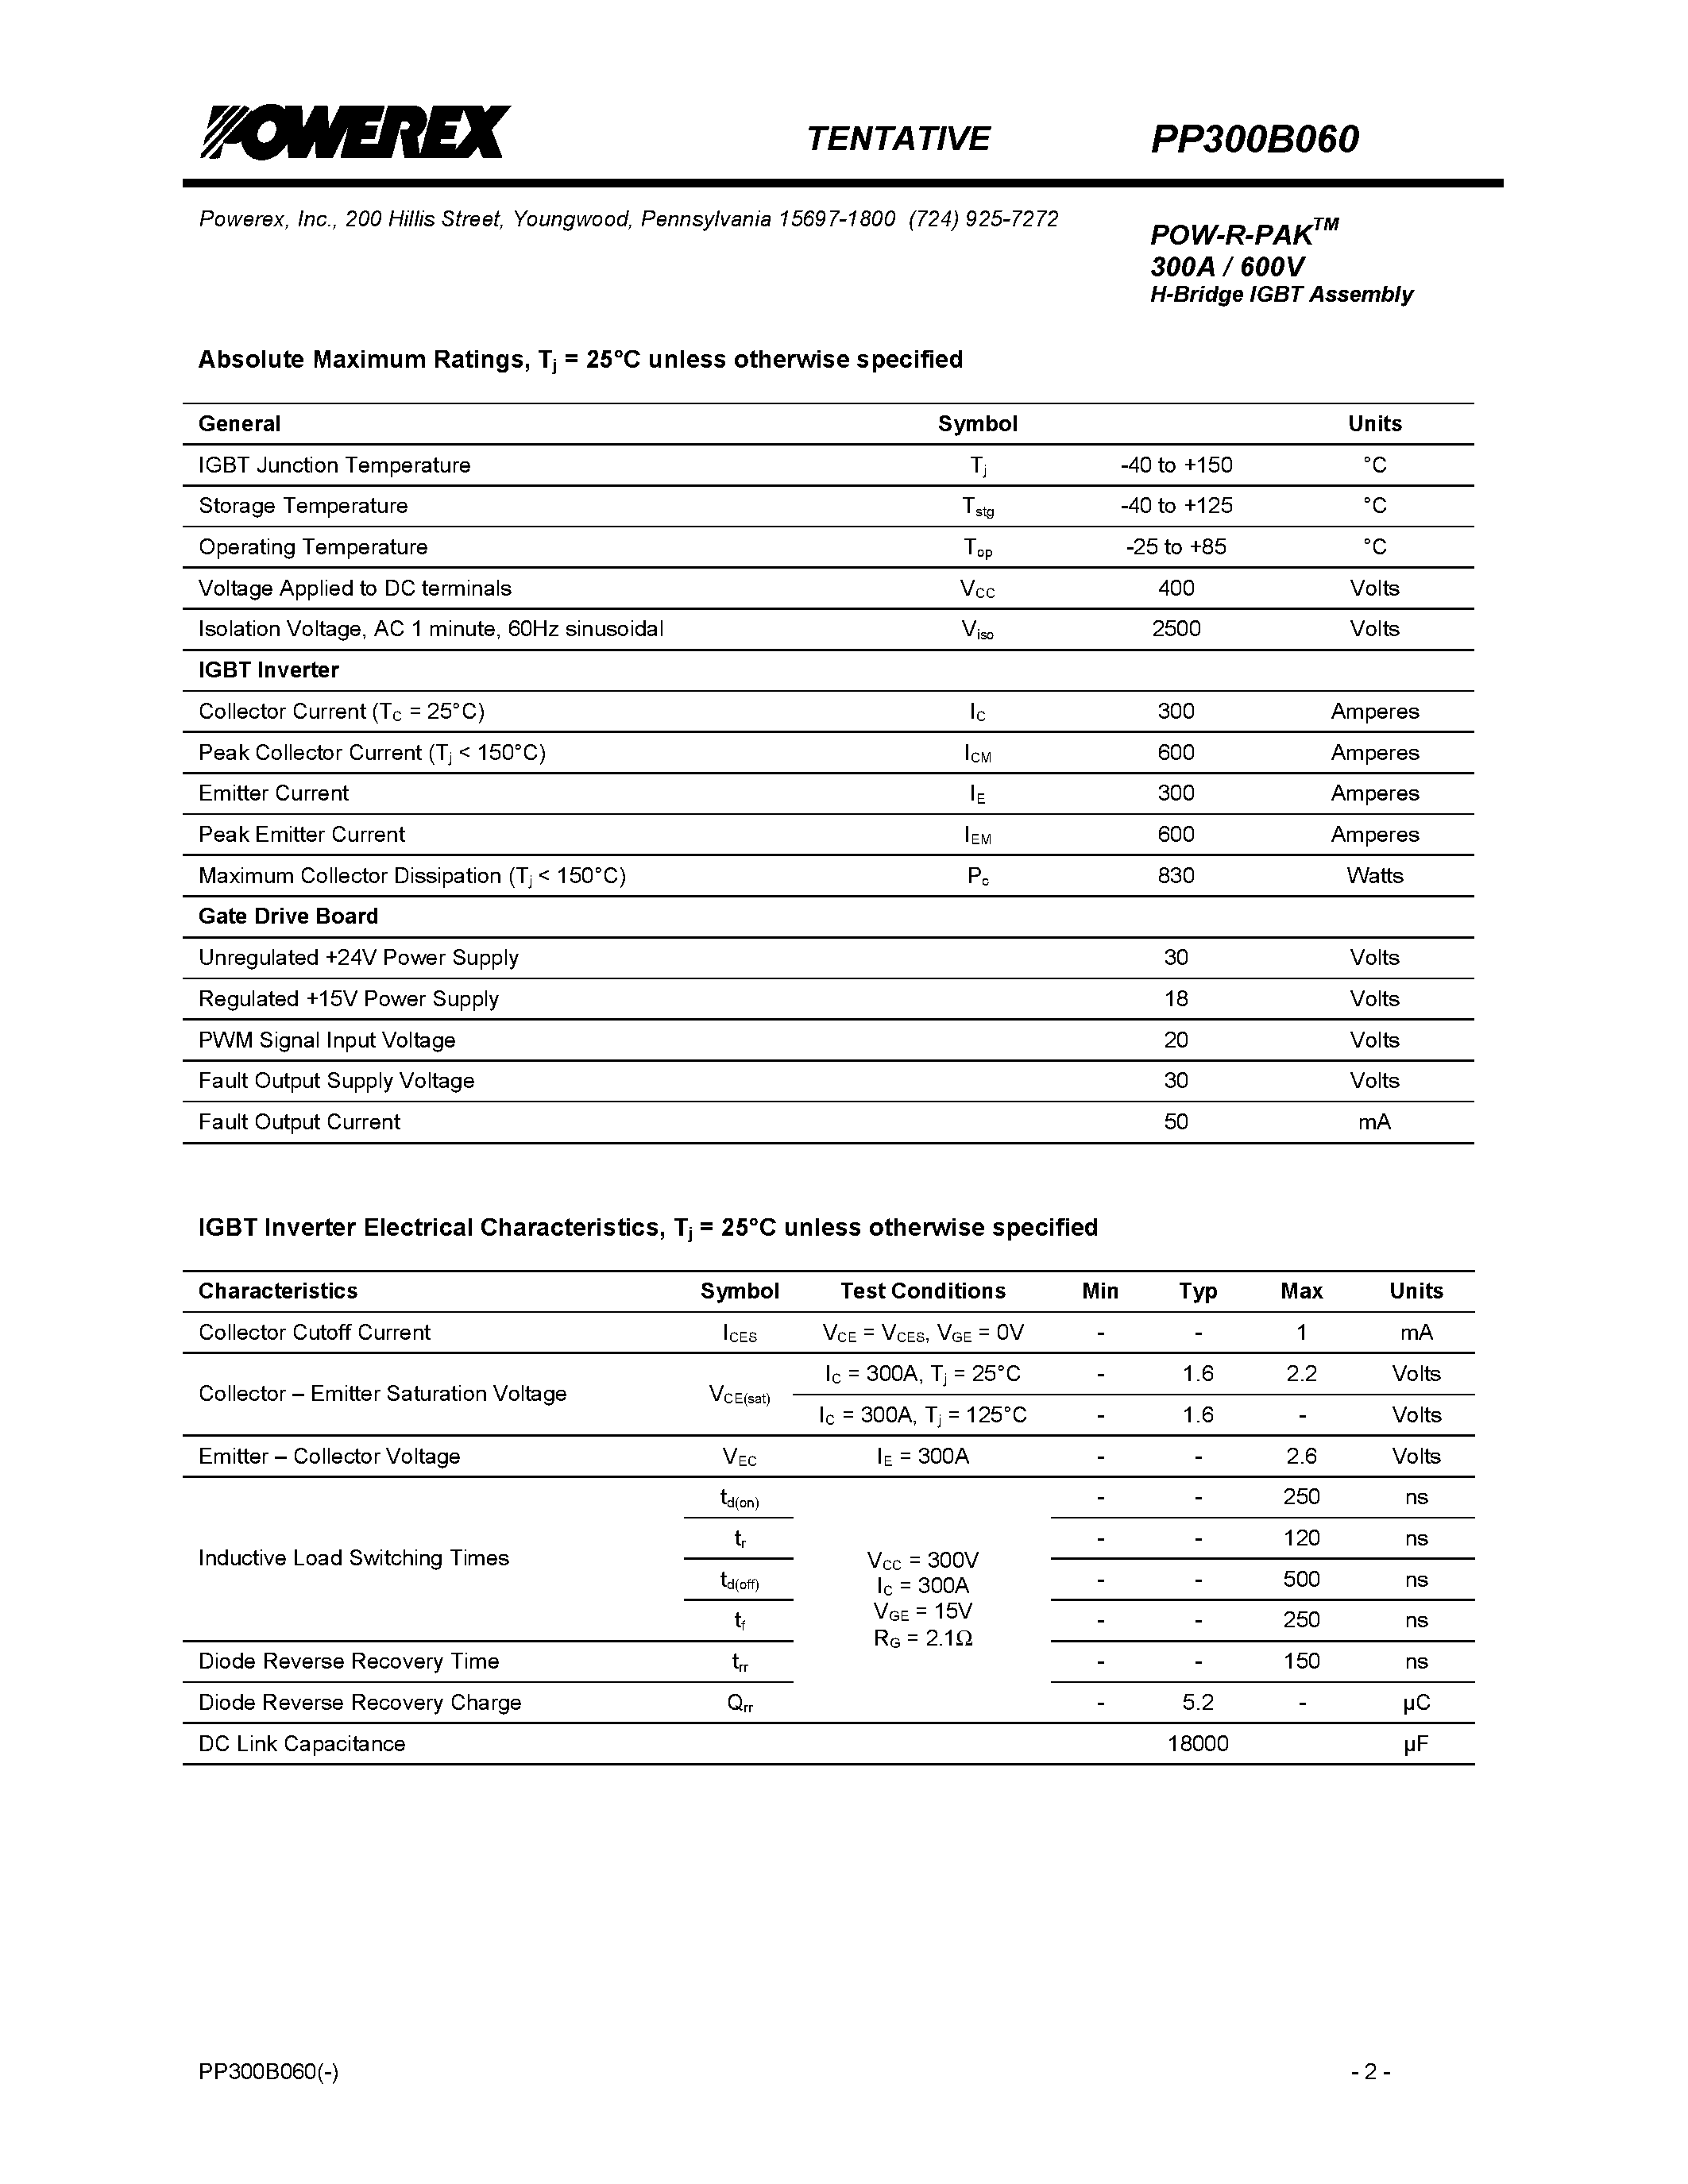 Datasheet PP300B060 - POW-R-PAK 300A / 600V H-Bridge IGBT Assembly page 2